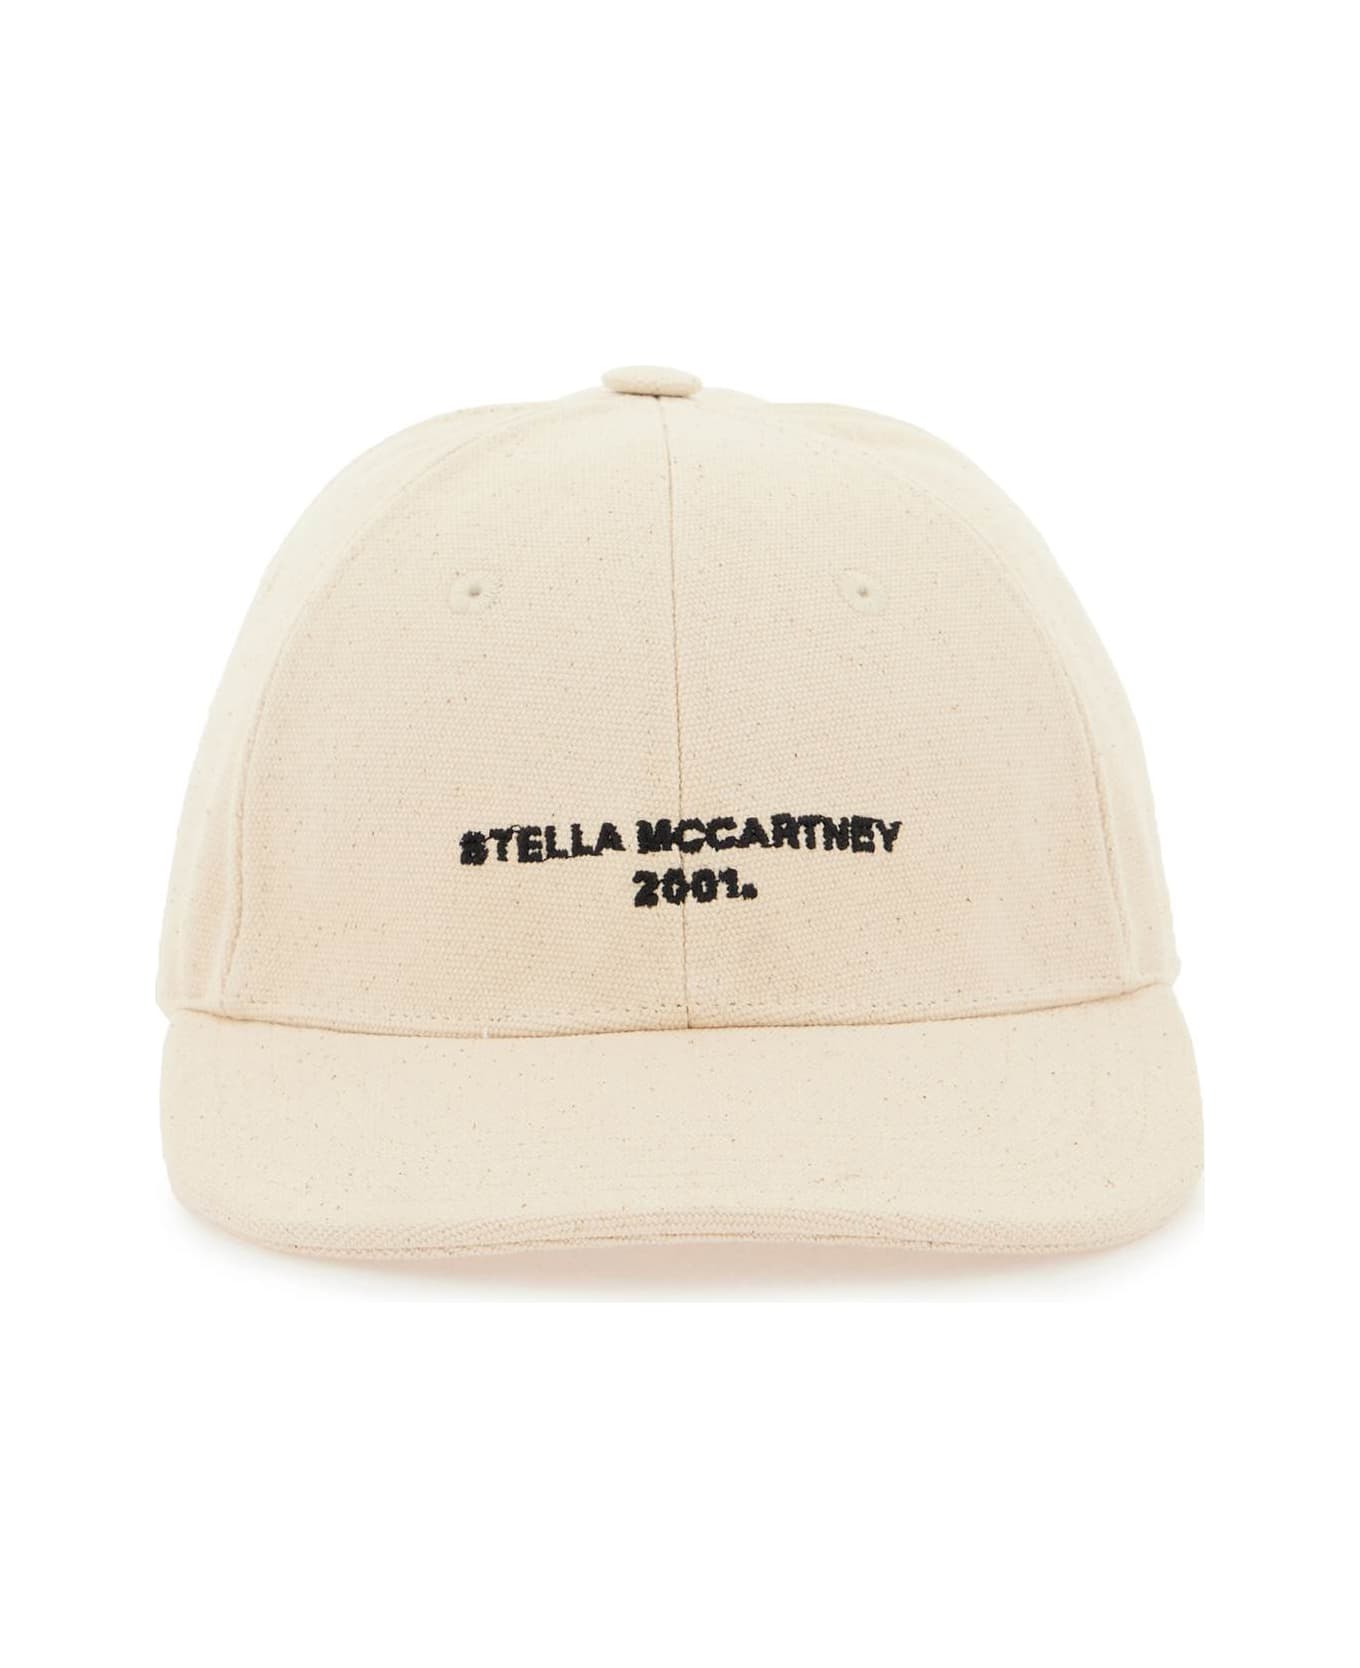 Stella McCartney Baseball Cap With Embroidery - IVORY (White)